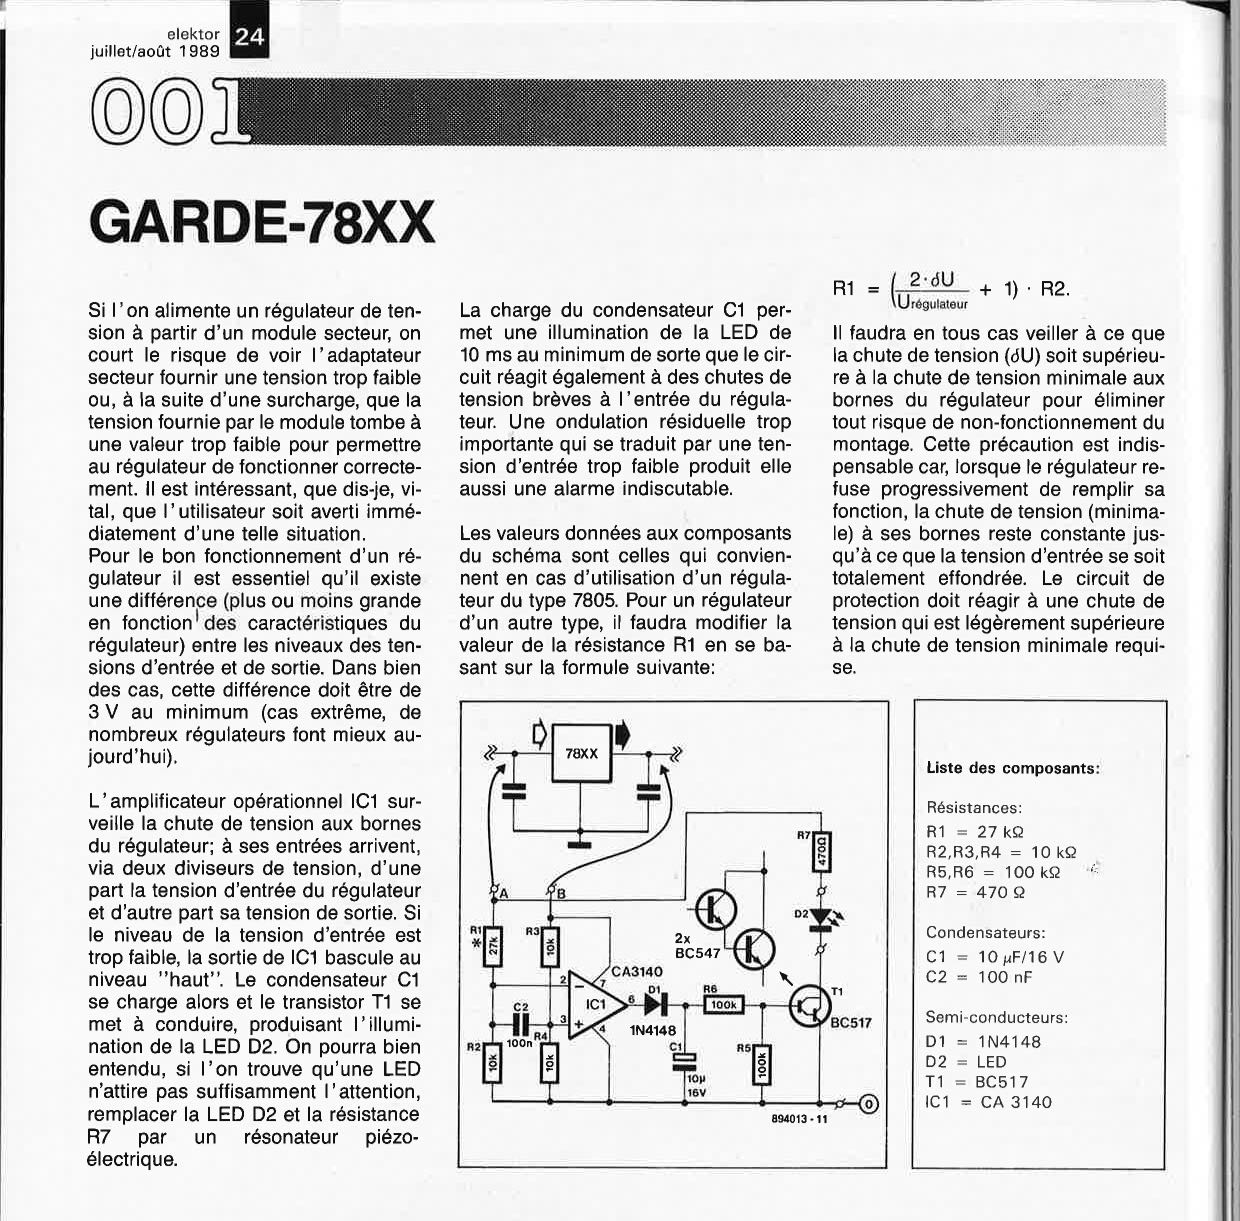 GARDE-78XX